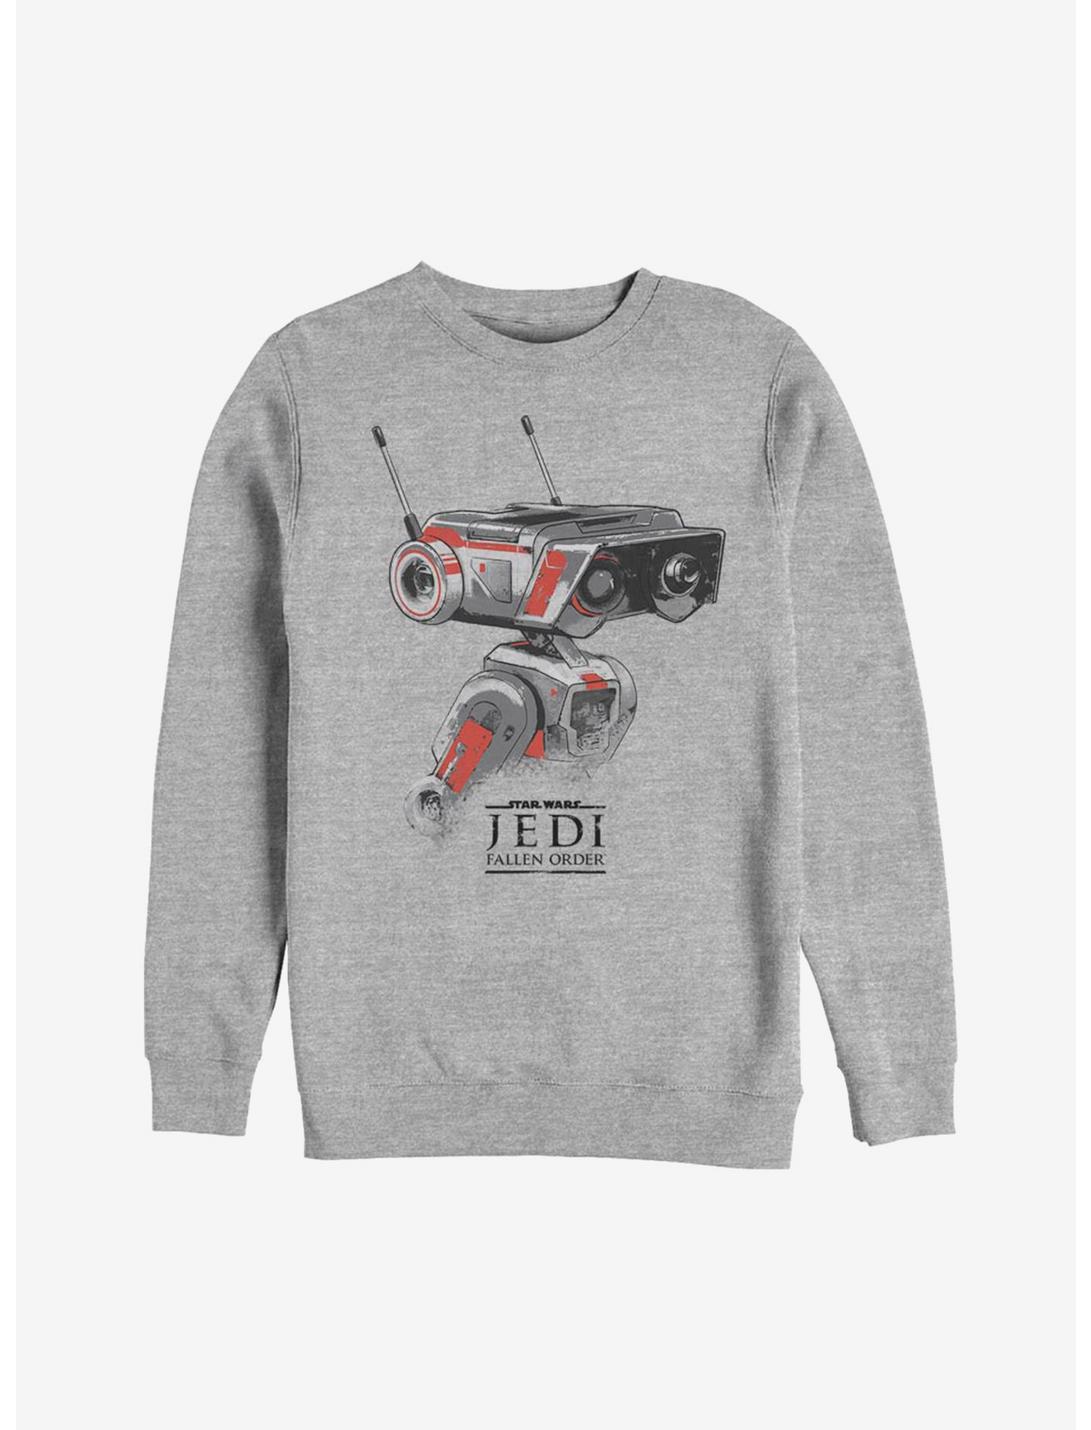 Star Wars Jedi Fallen Order BD-1 Sketch Sweatshirt, ATH HTR, hi-res